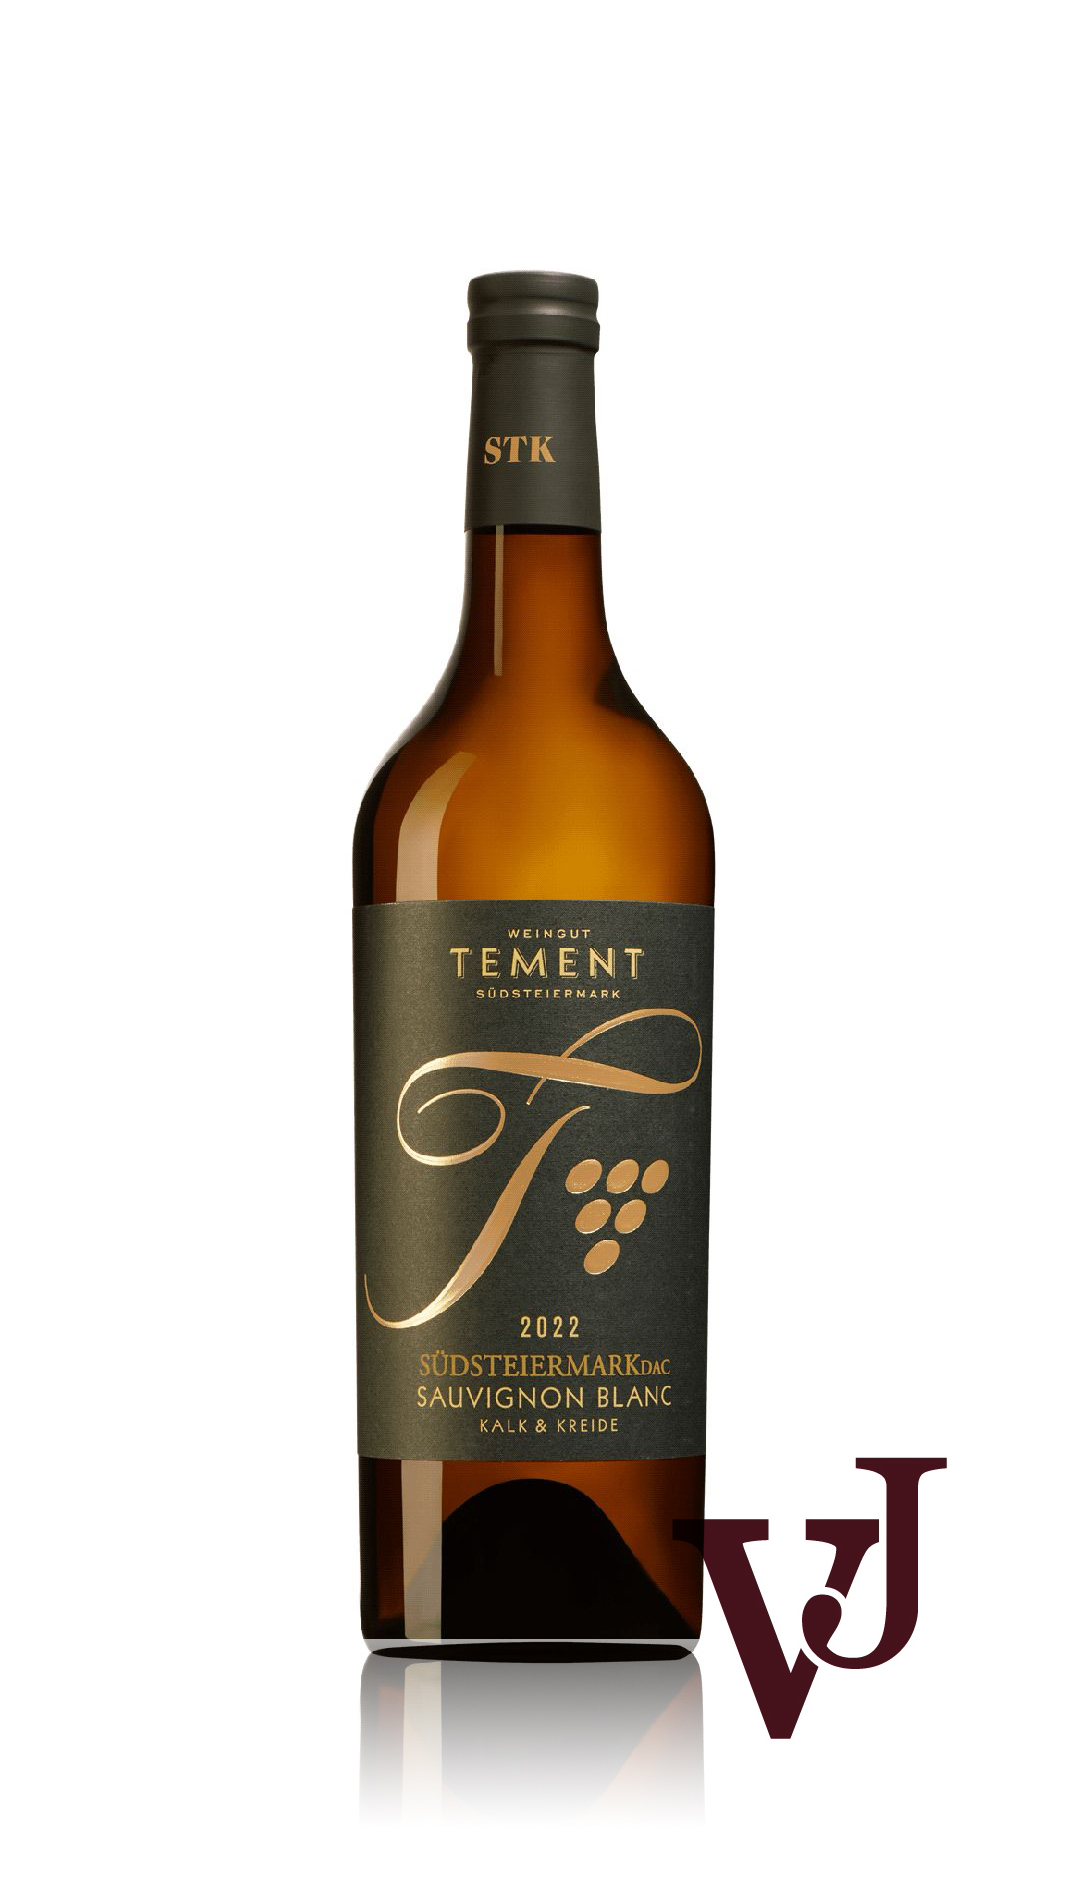 Vitt Vin - Weingut Tement Kalk & Kreide 2022 artikel nummer 9497301 från producenten Weingut Tement från området Österrike